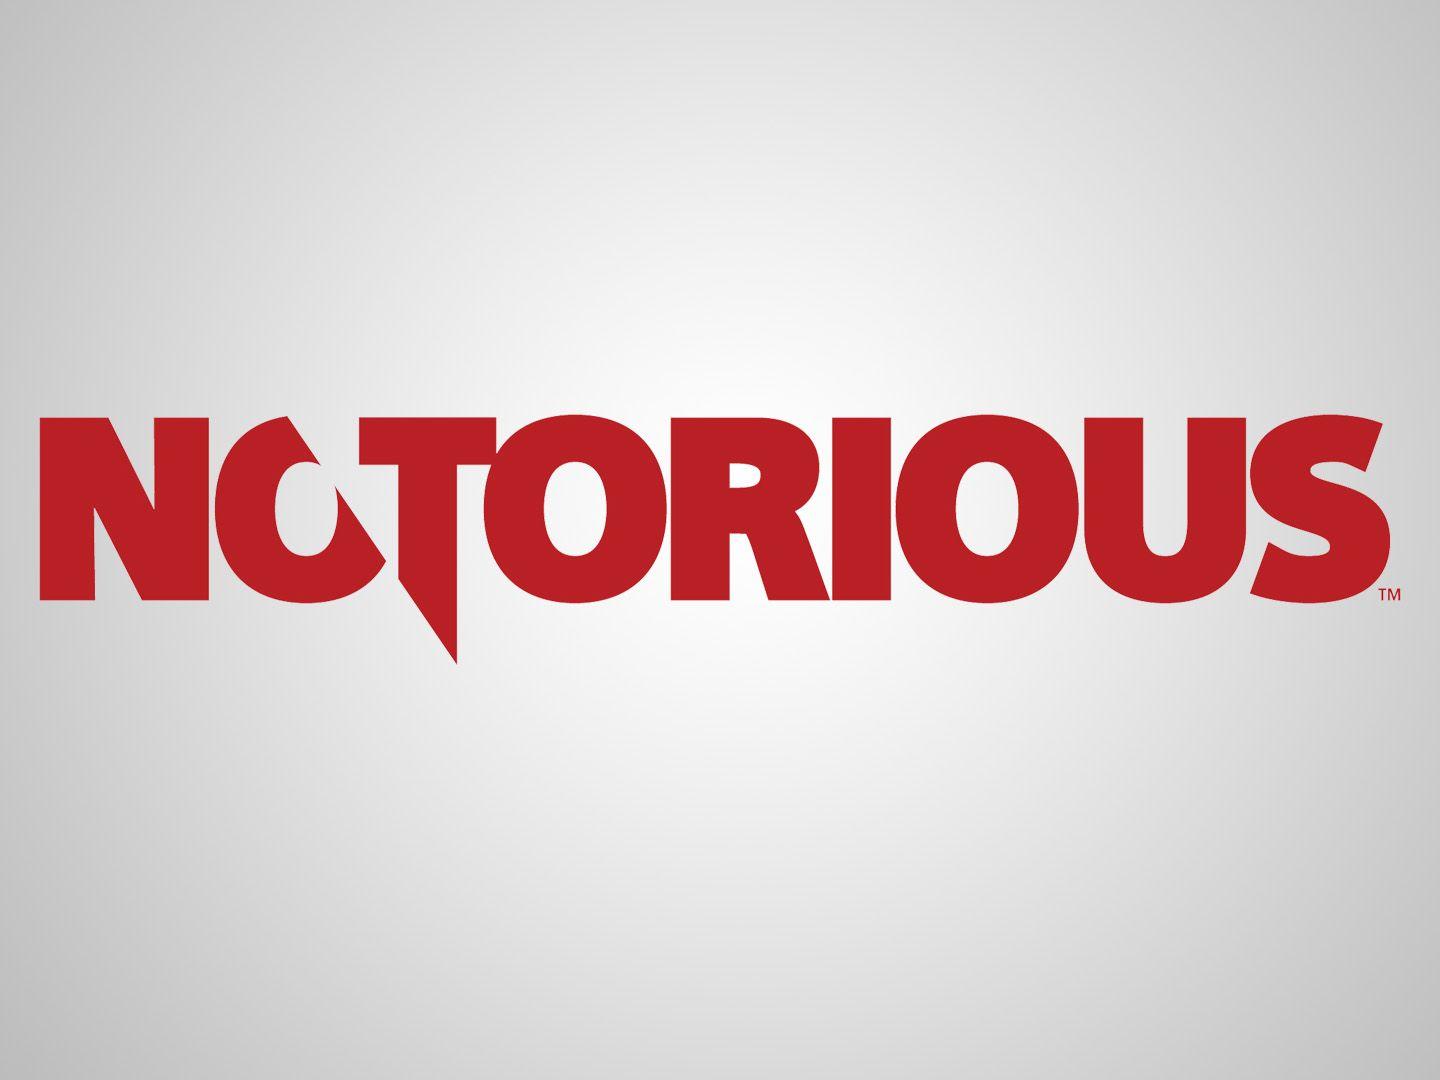 Notorious Logo - Notorious (TV series)